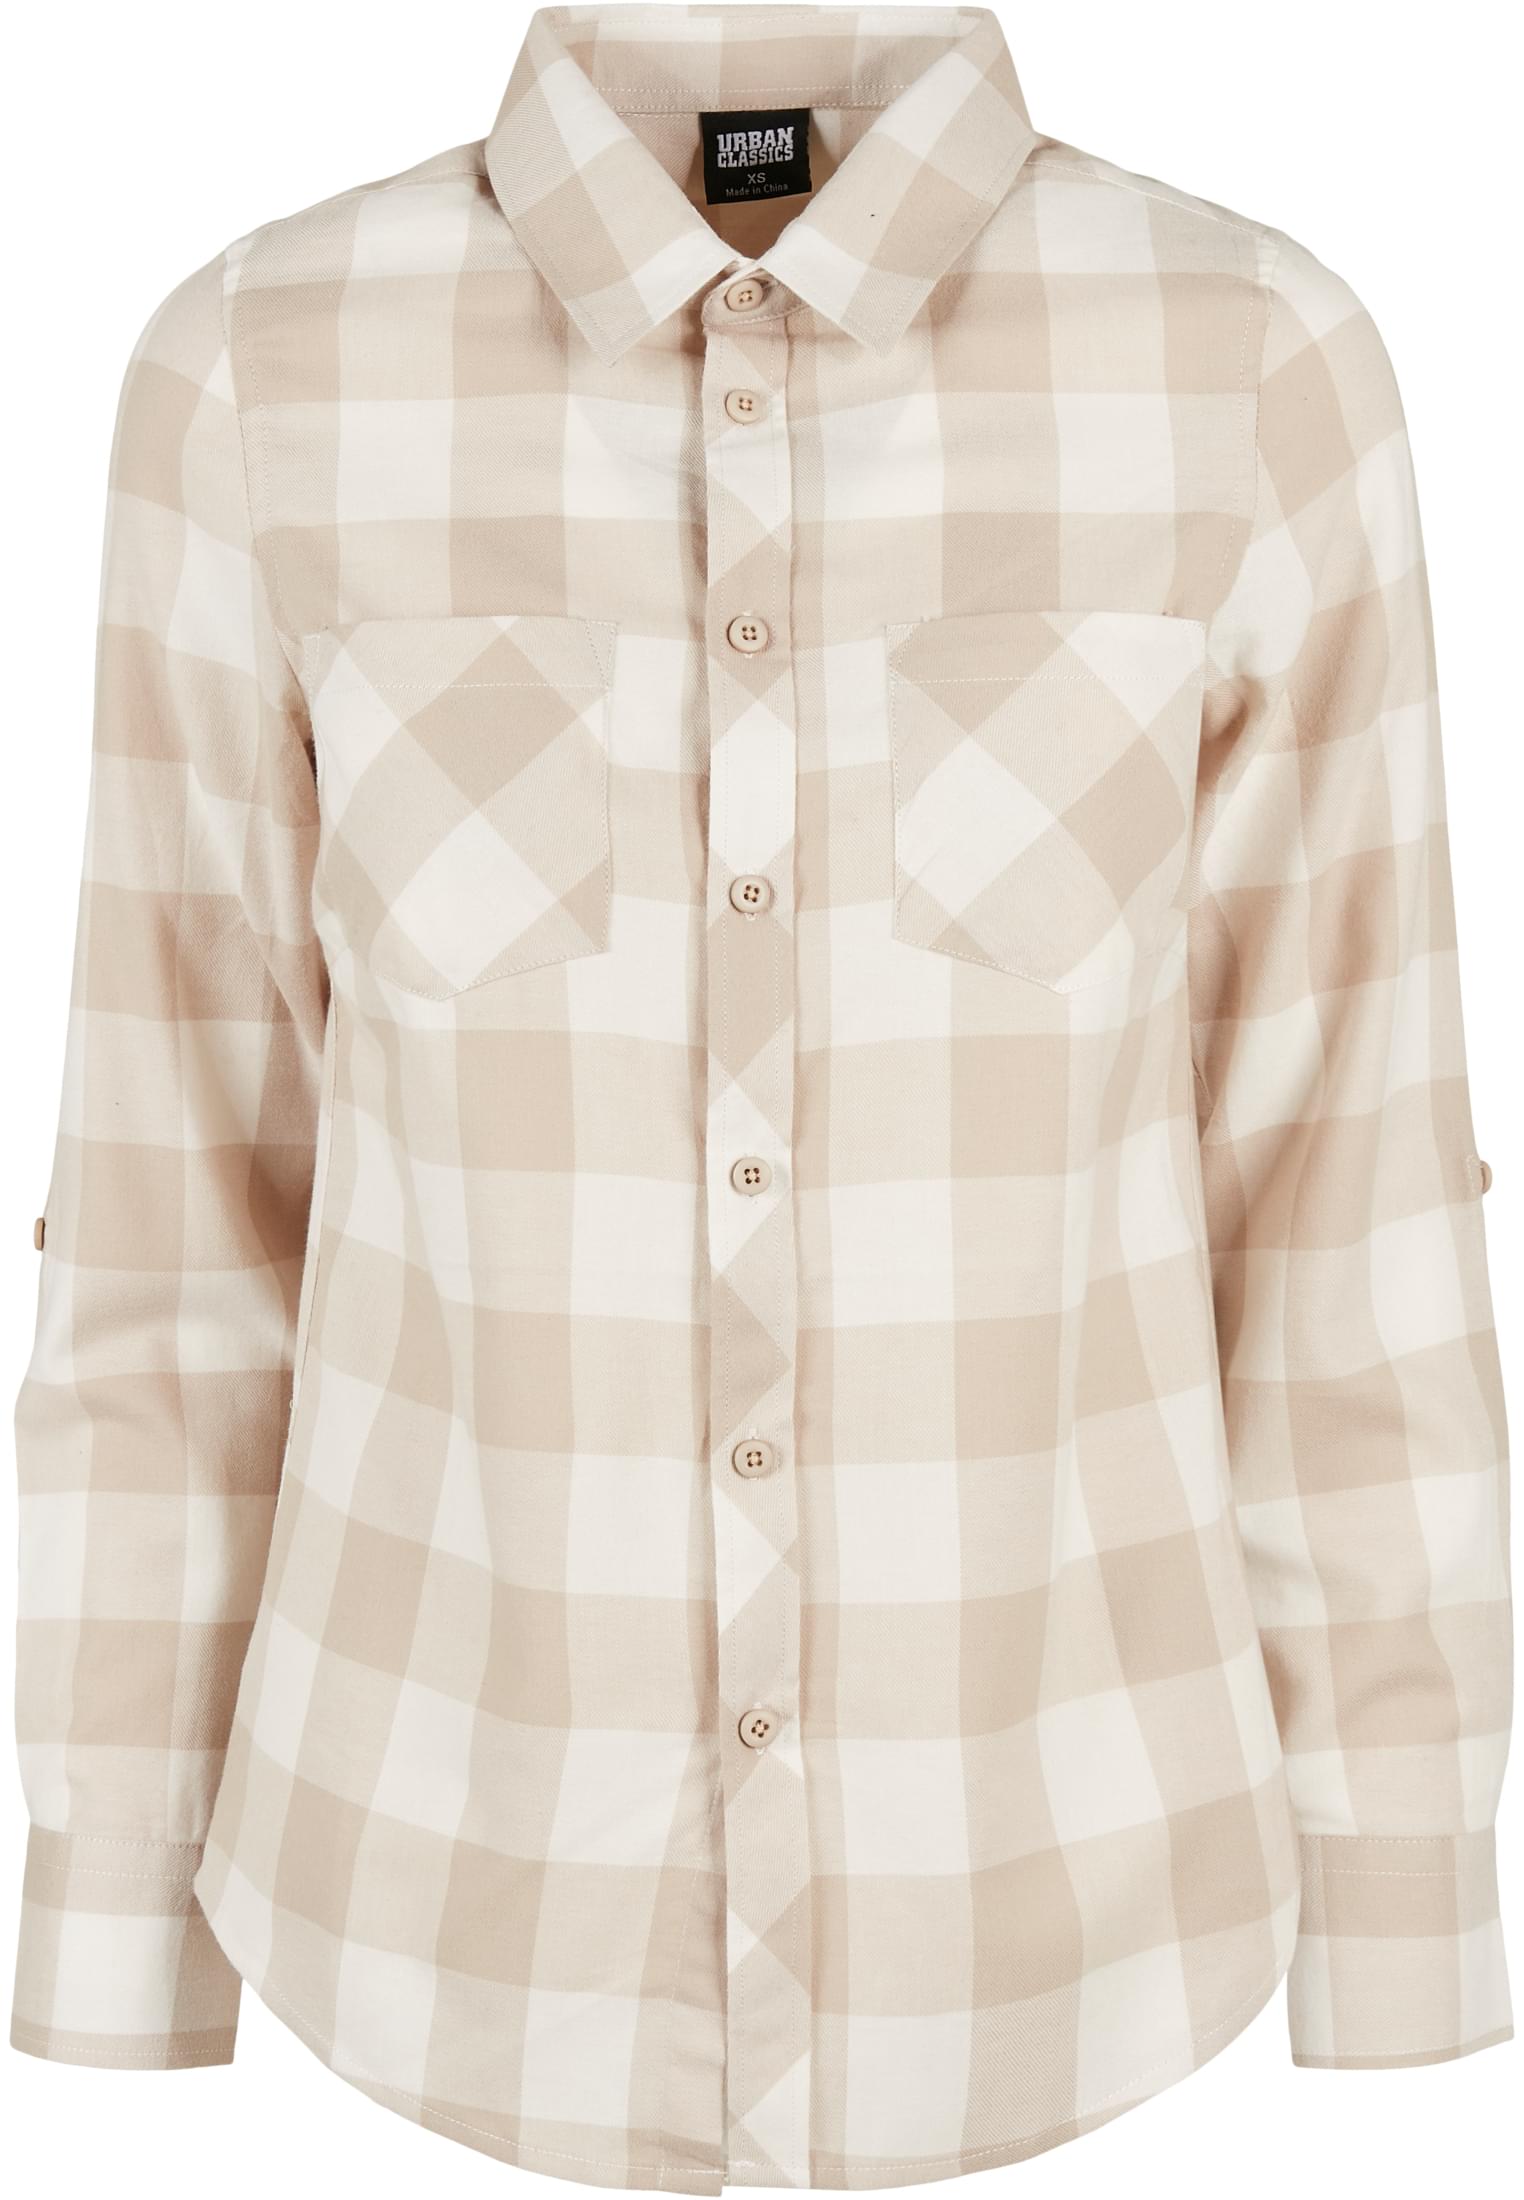 Damen Ladies Turnup Checked Flanell Shirt in Farbe whitesand/lighttaupe